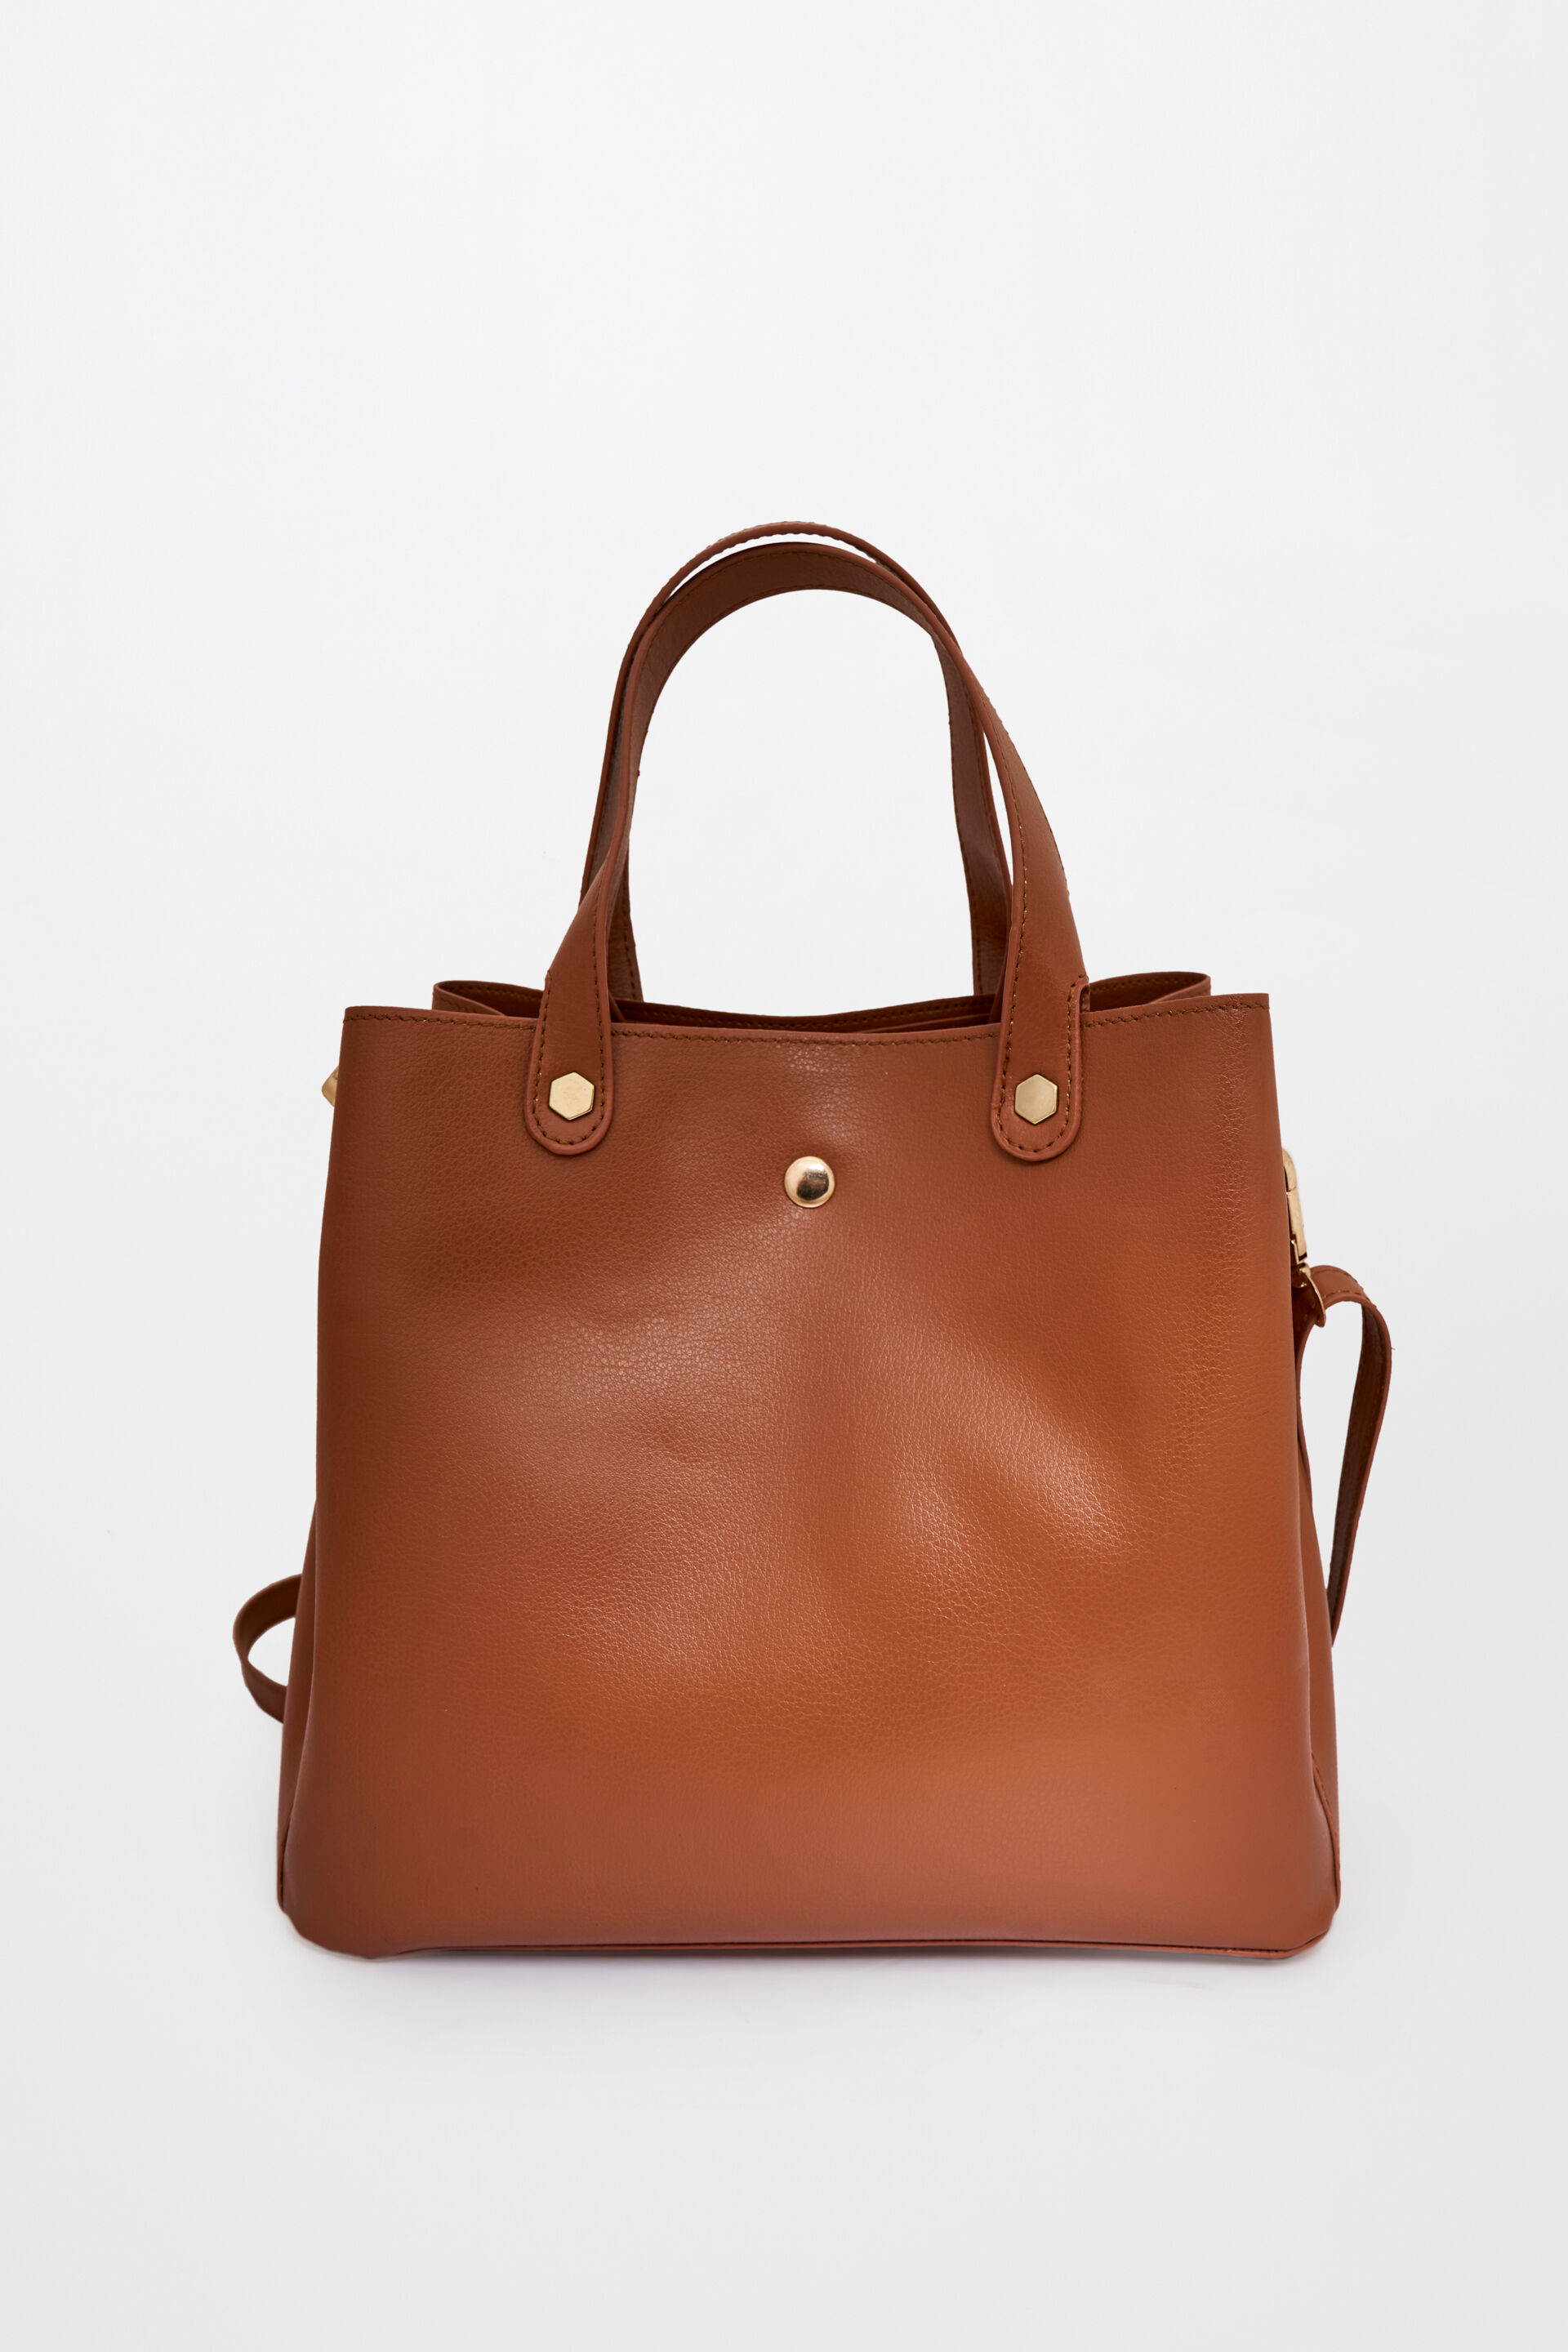 Jute Handbags: Buy Best Jute Handbags Online at Great Prices - Zouk